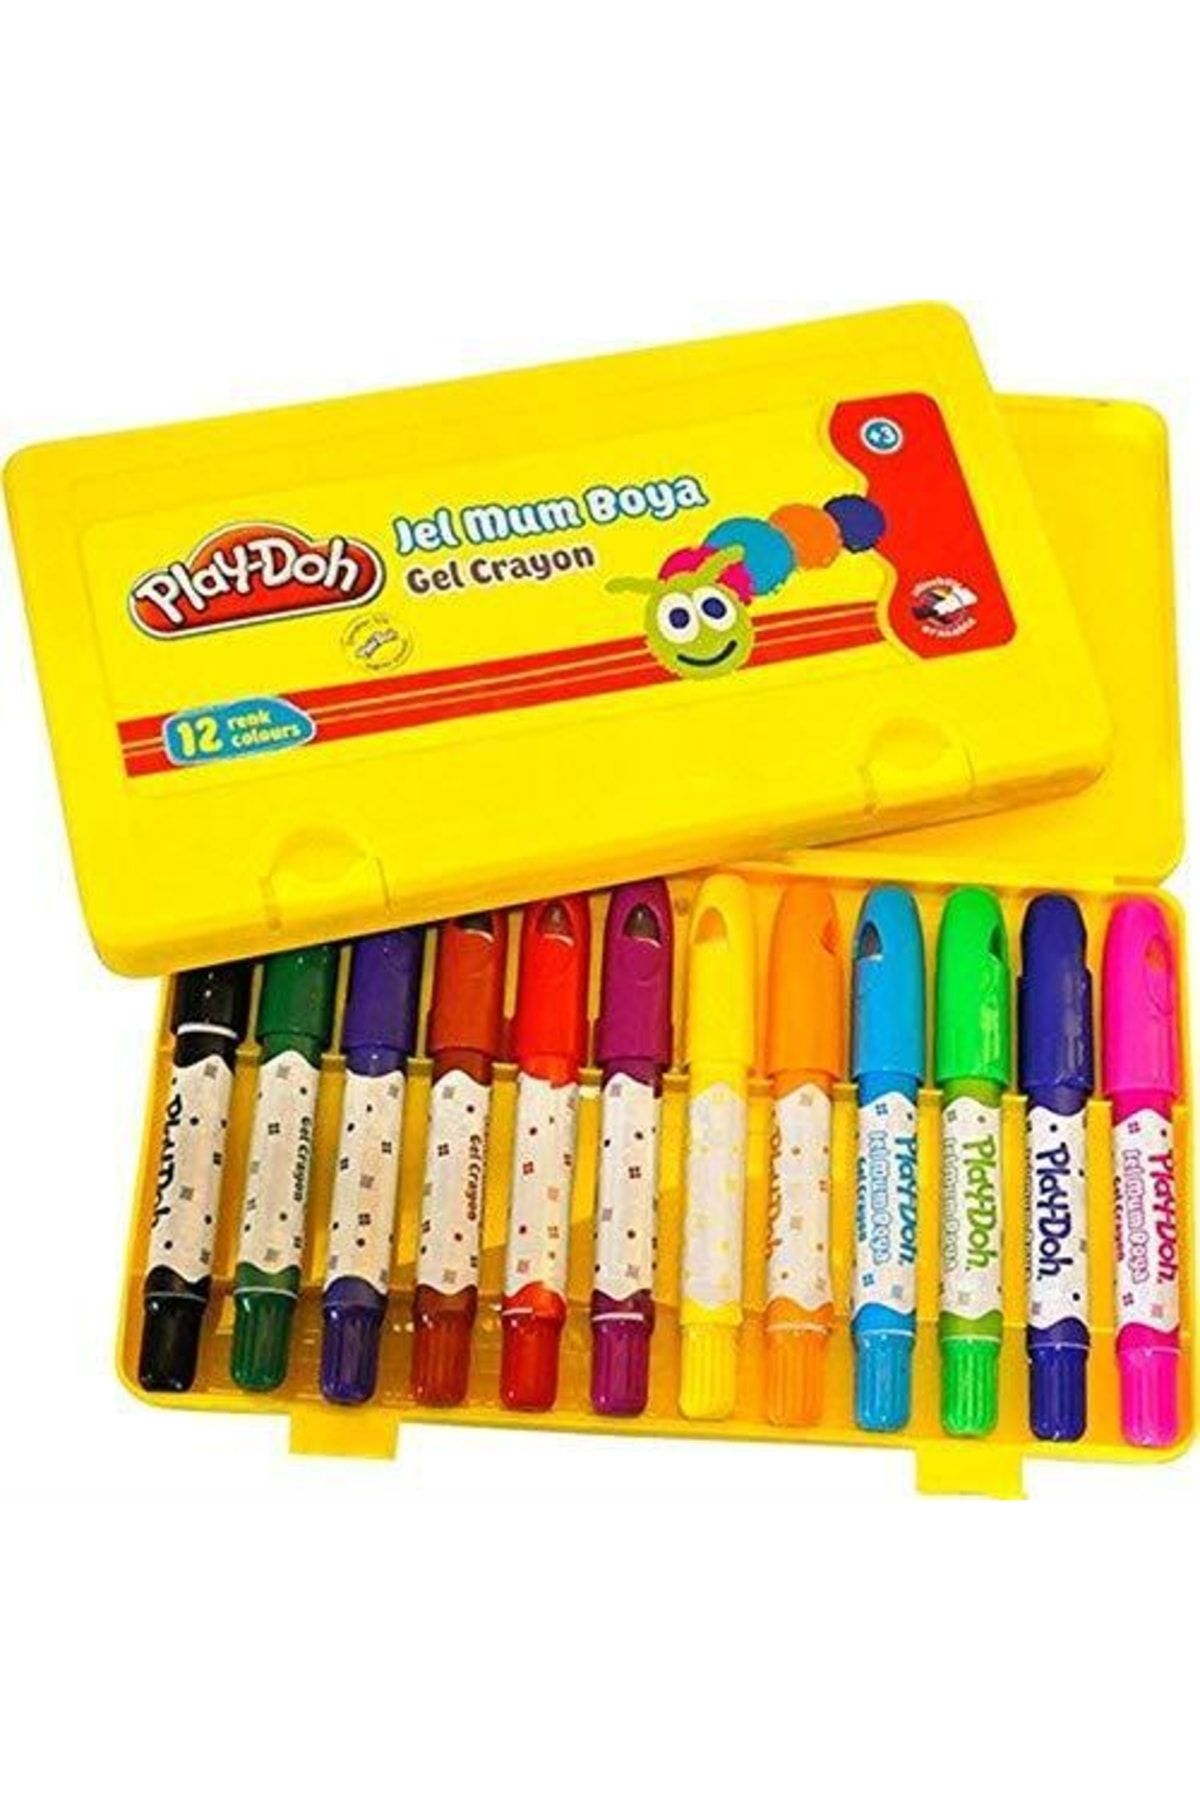 Play Doh Play-doh Crayon Mum Boya Jel 12 Renk Pp Box Cr014